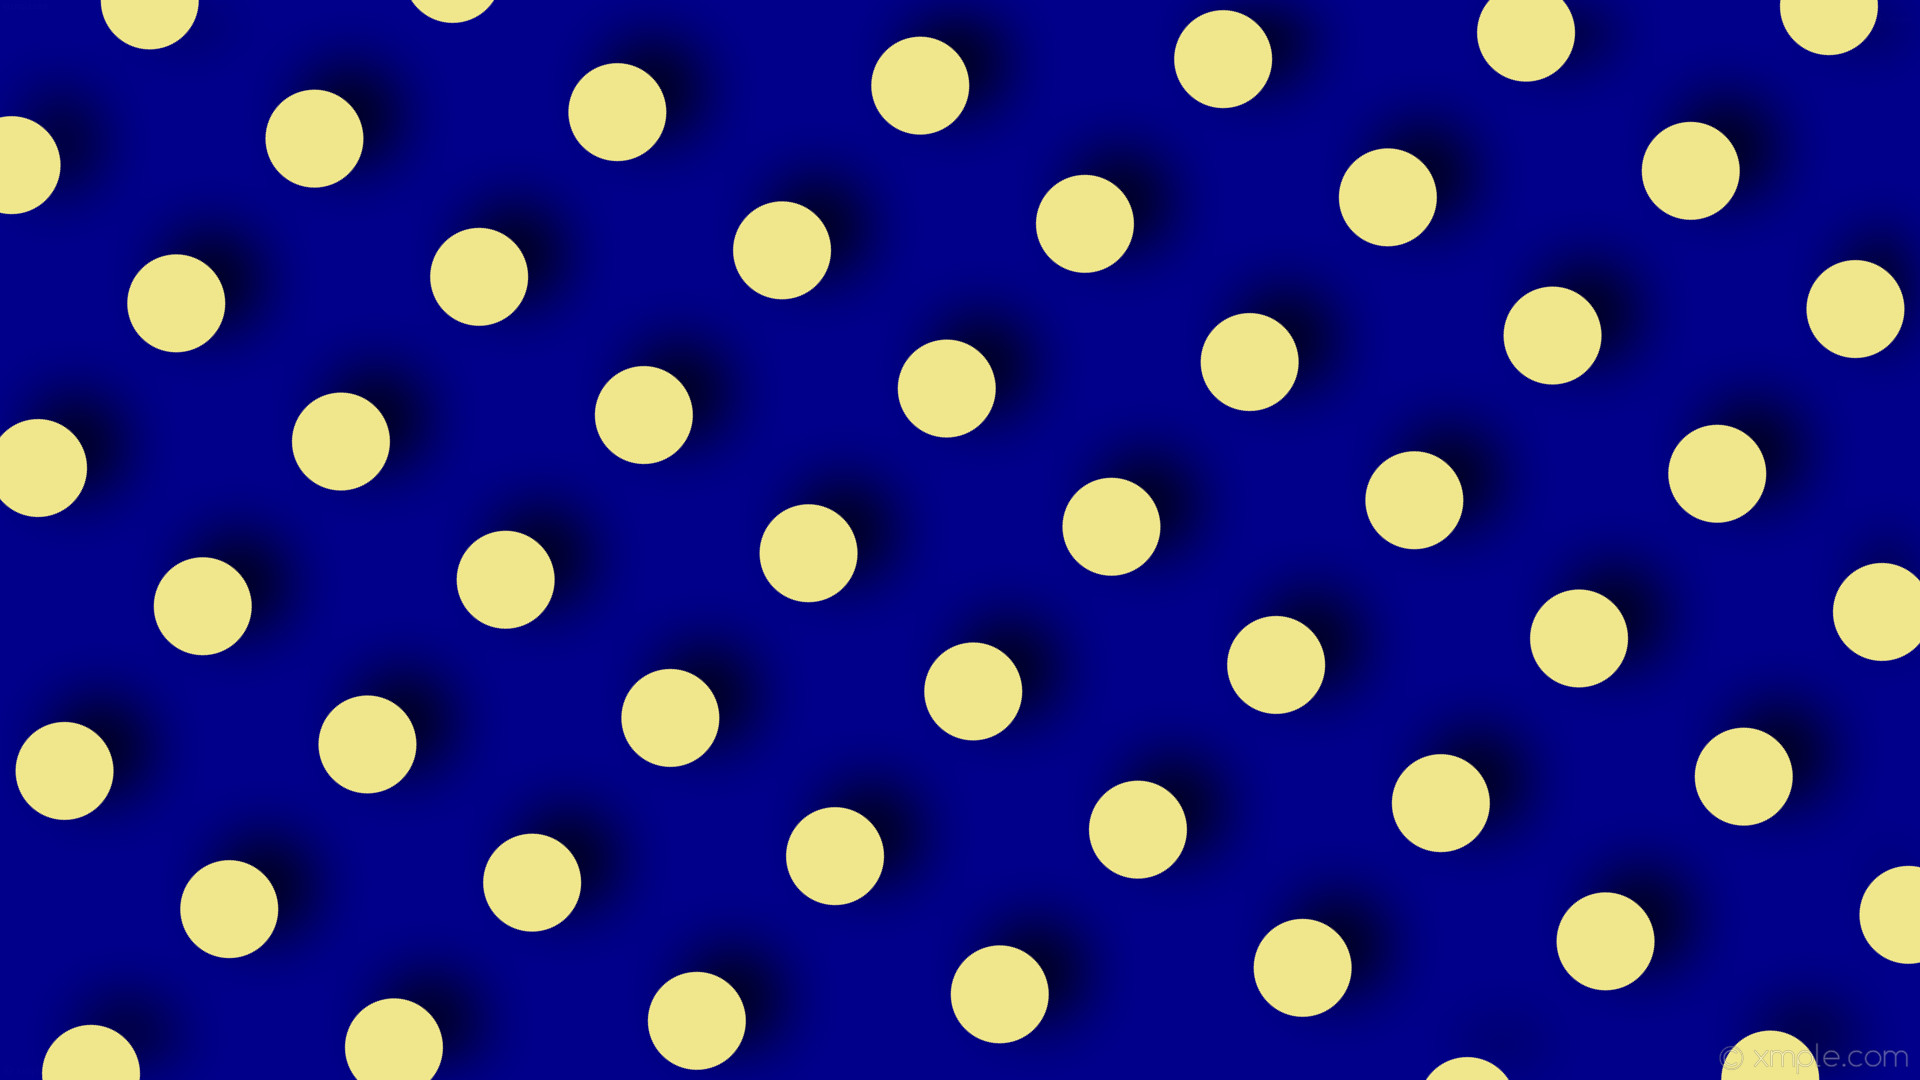 1920x1080 wallpaper dots drop shadow blue yellow polka dark blue khaki #00008b  #f0e68c 50Â°